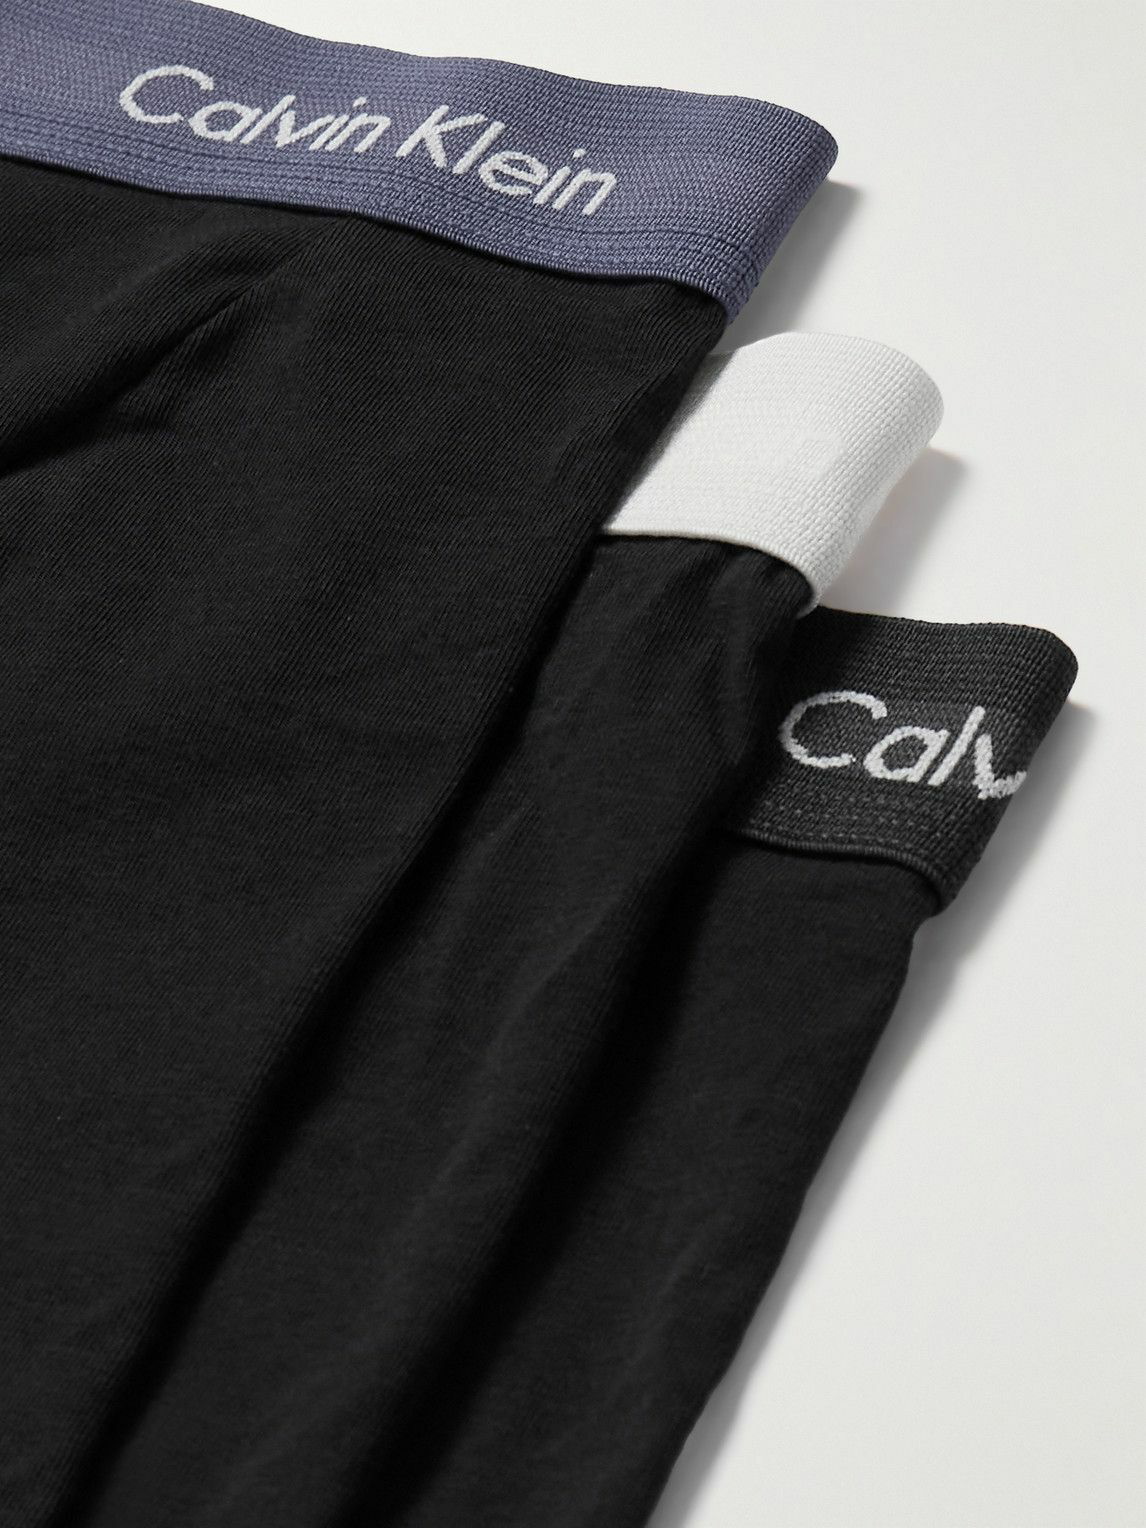 Calvin Klein Underwear COTTON STRETCH Low Rise Trunk LOW RISE